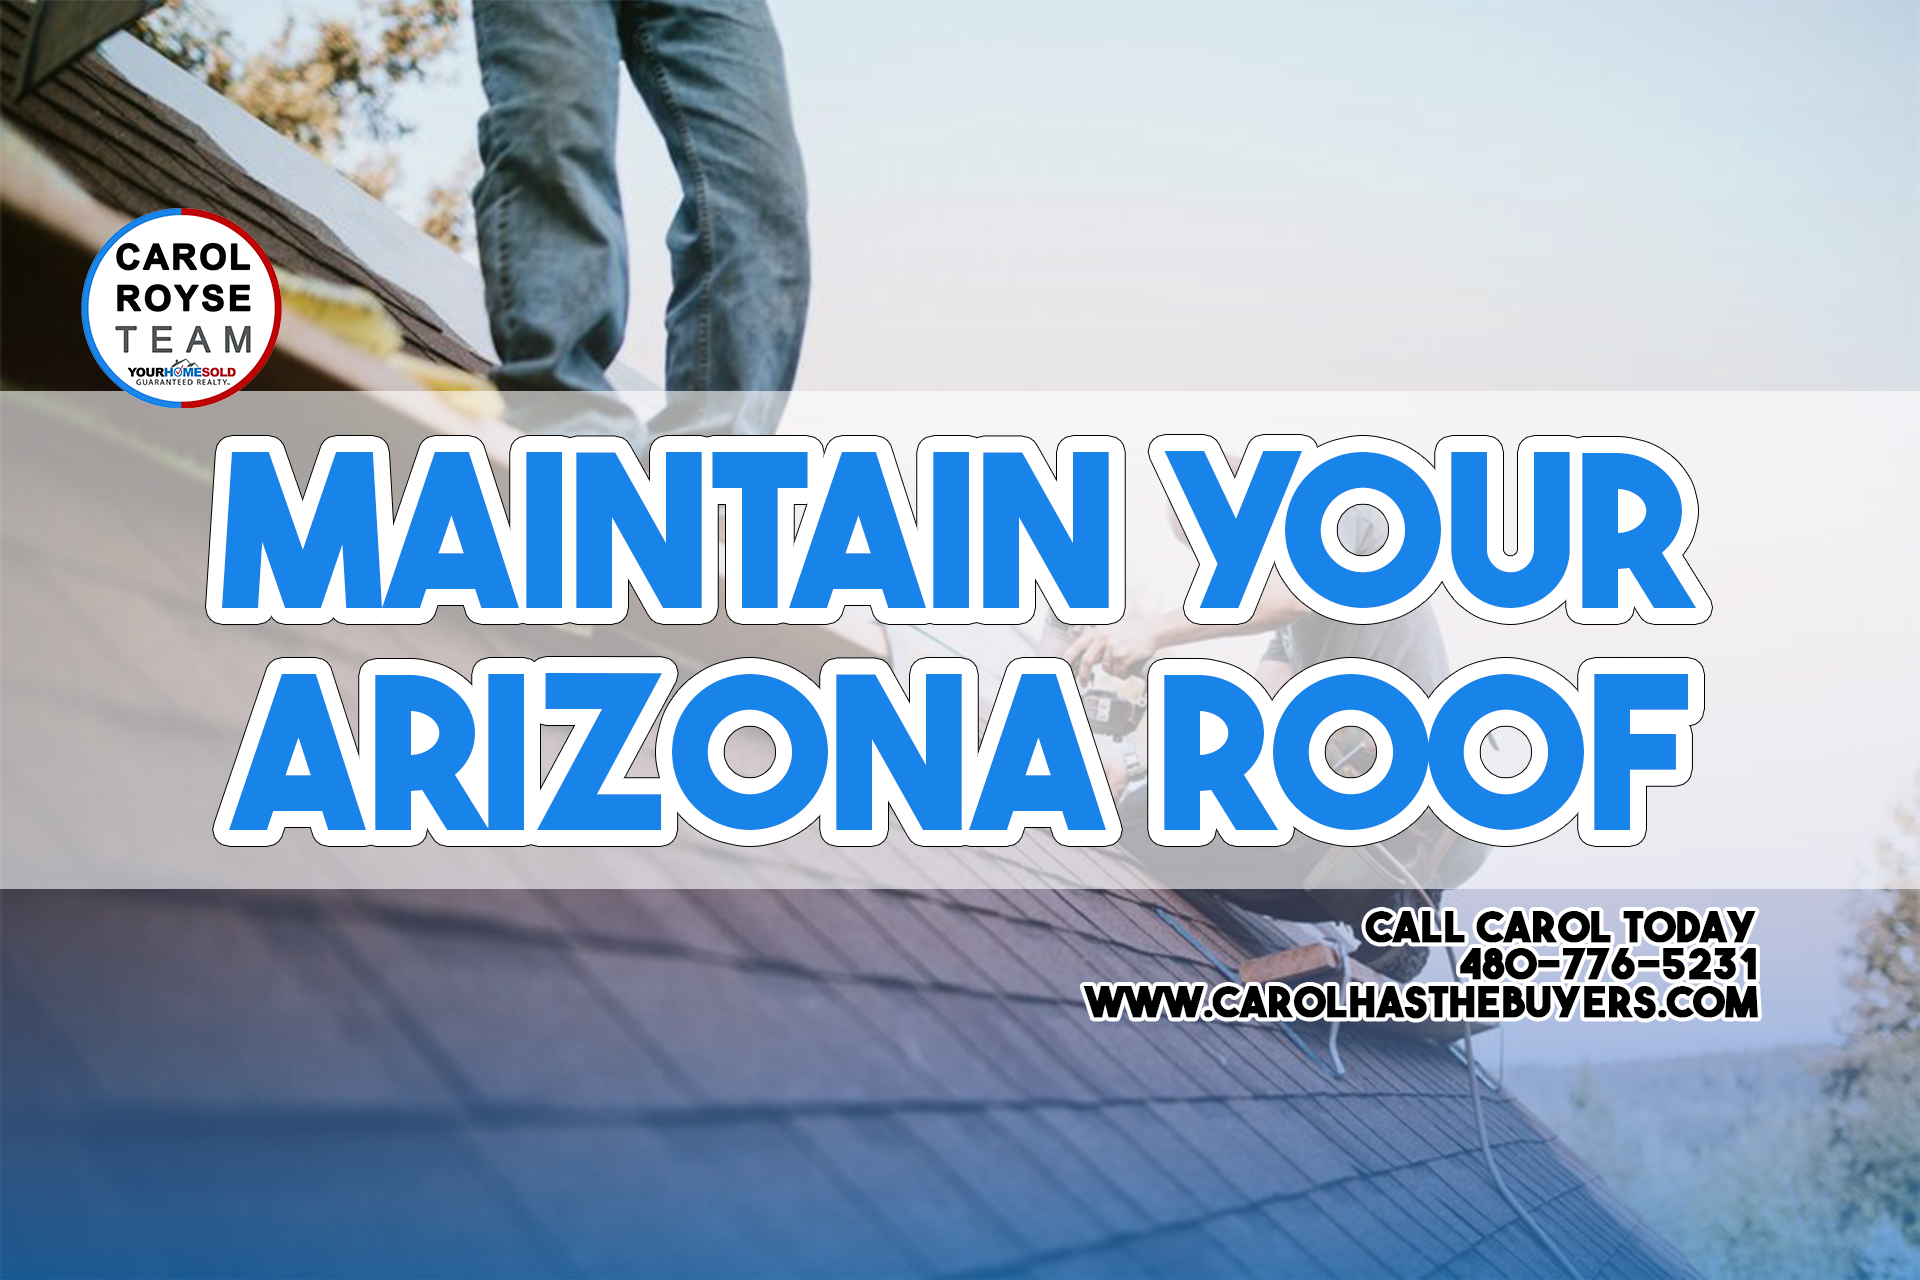 Maintain your Arizona roof